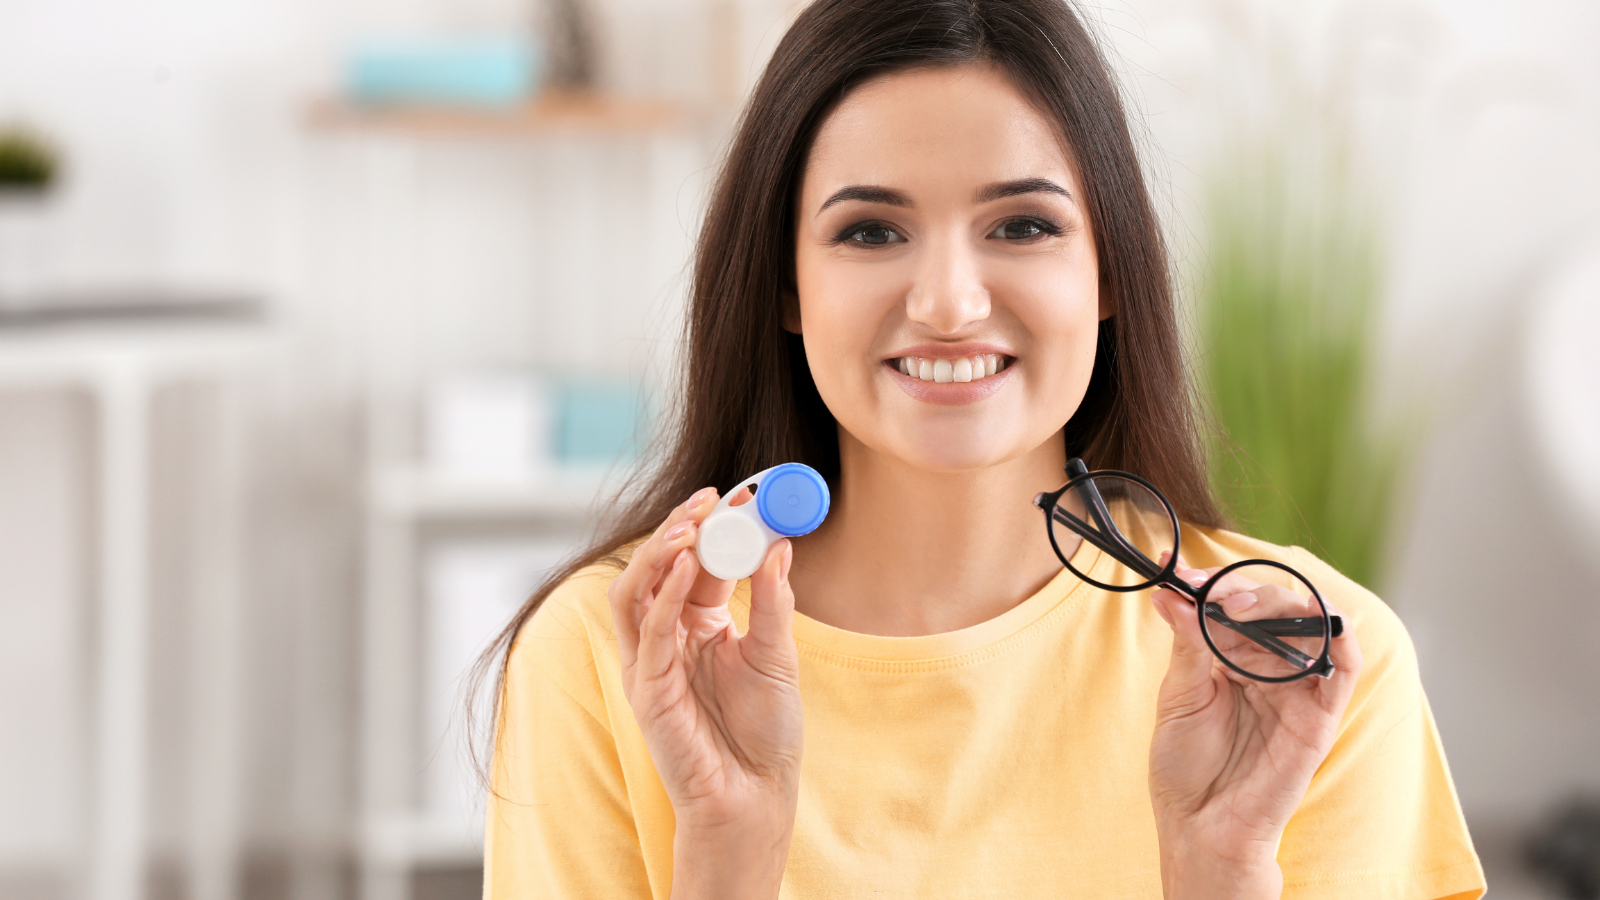 Contact lenses: Better Alternative For Wearing Glasses